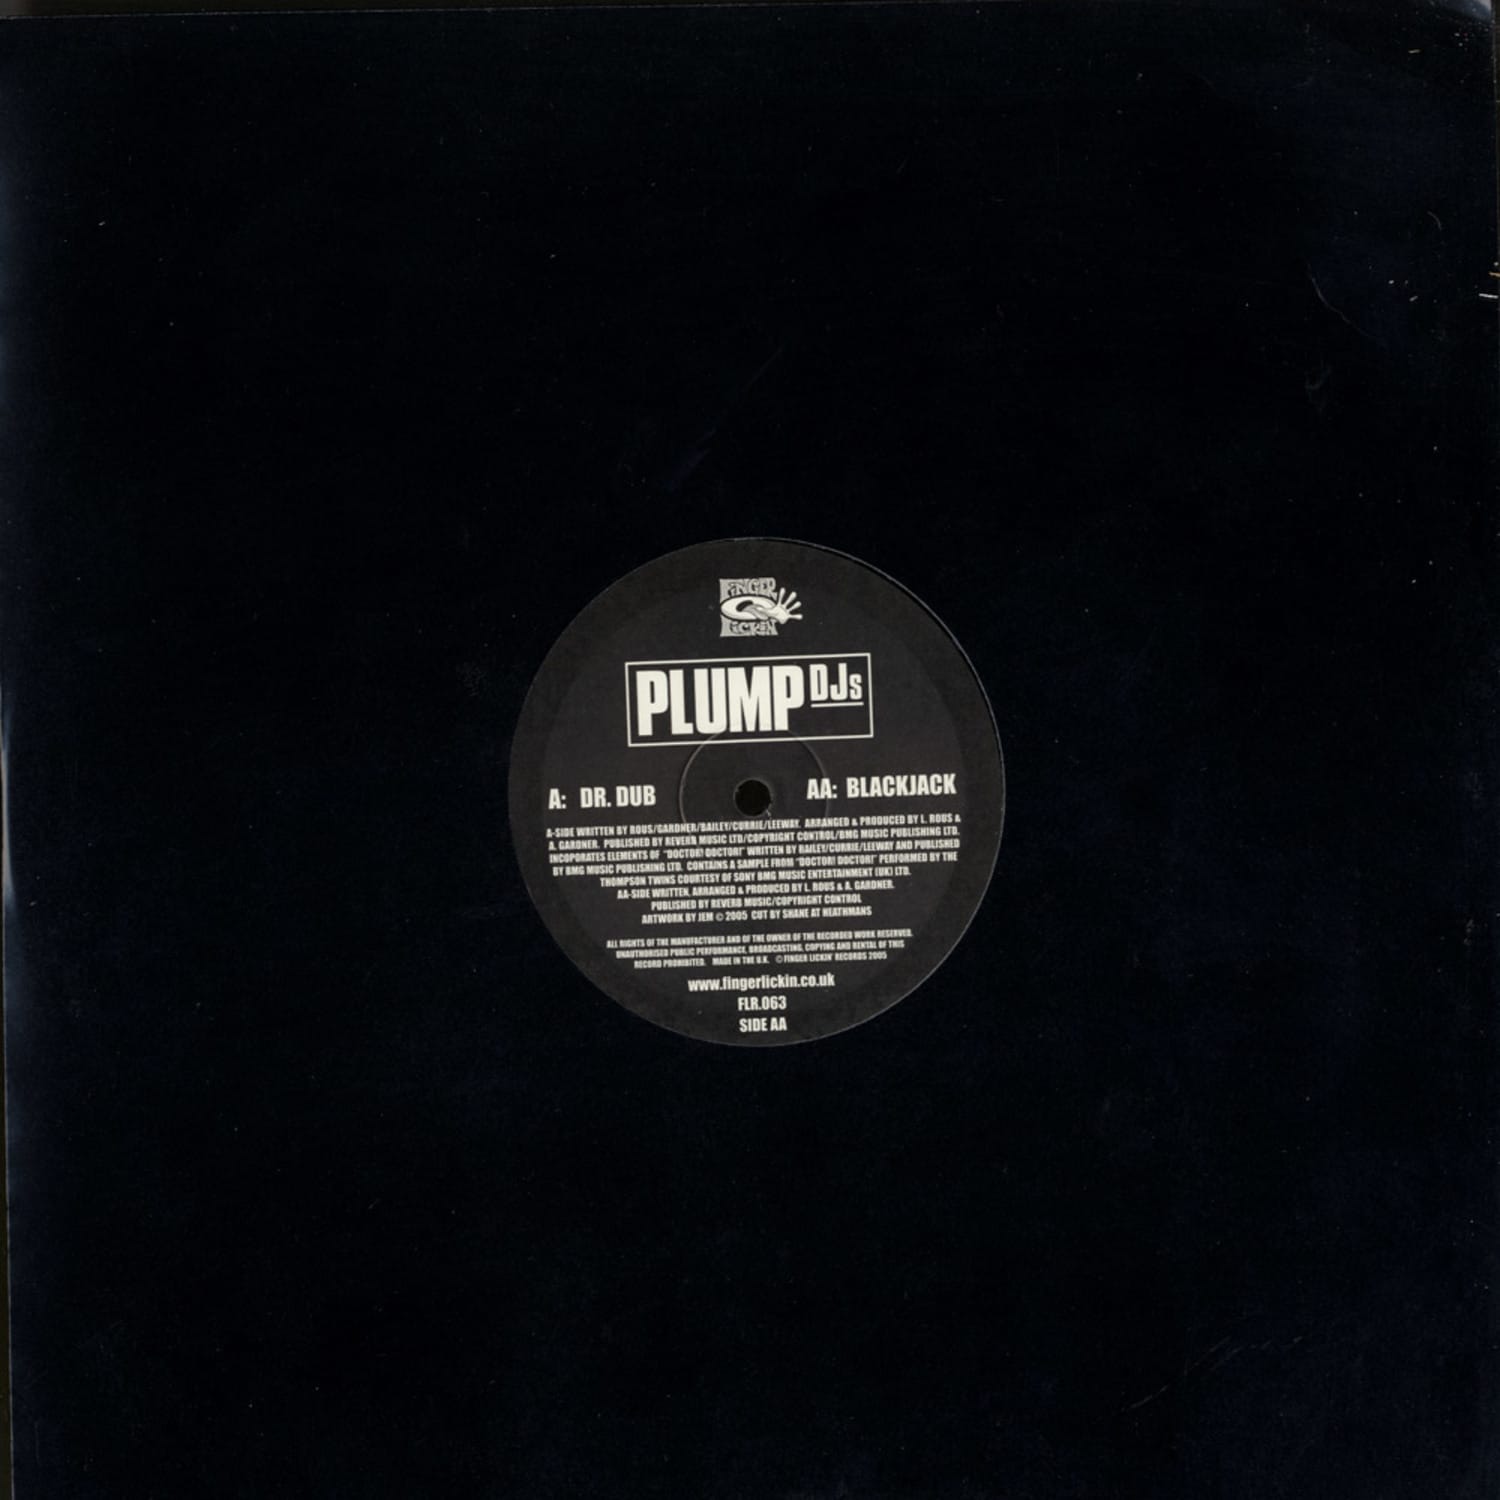 Plump DJs - DR. DUB 